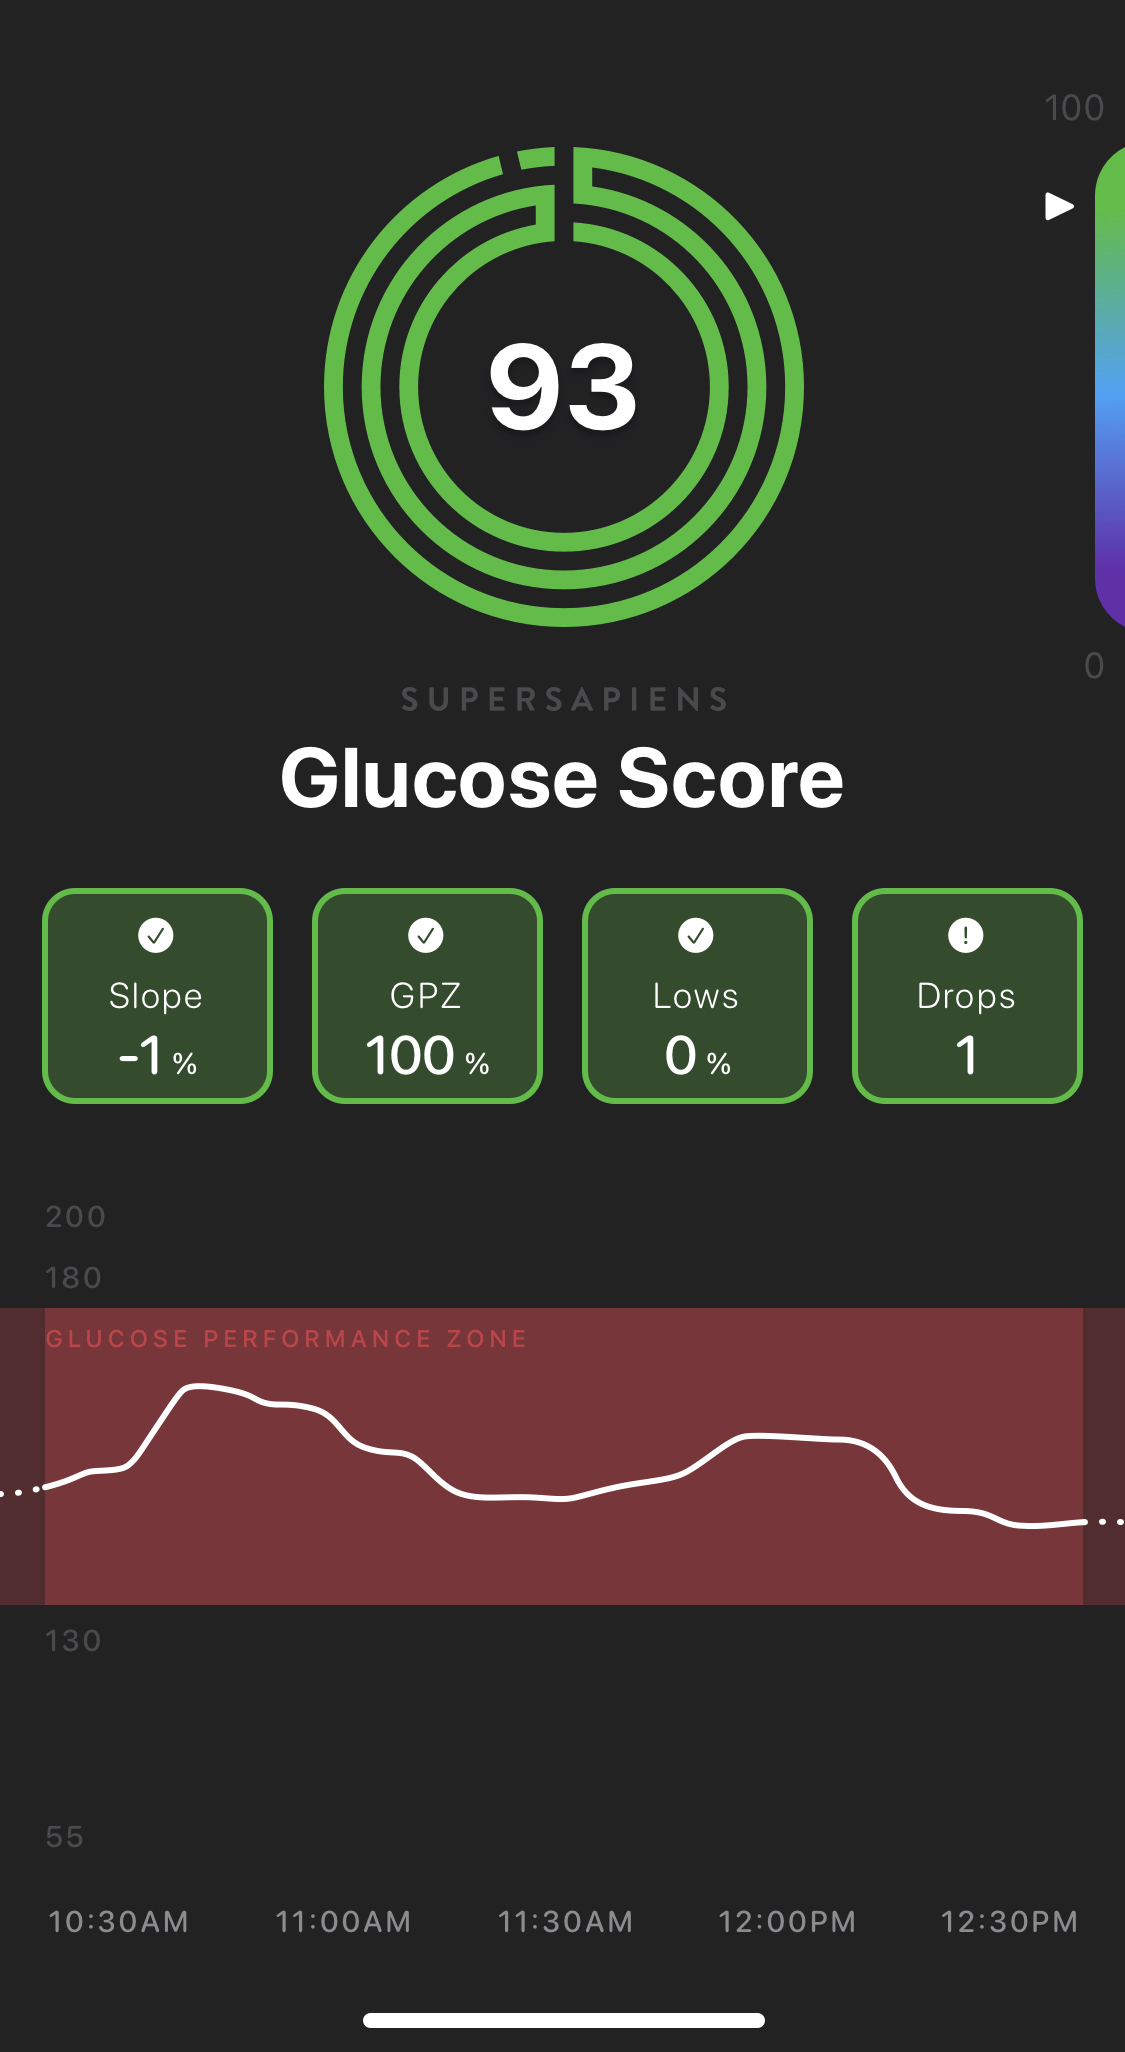 Supersapiens data and glucose score from marathon run